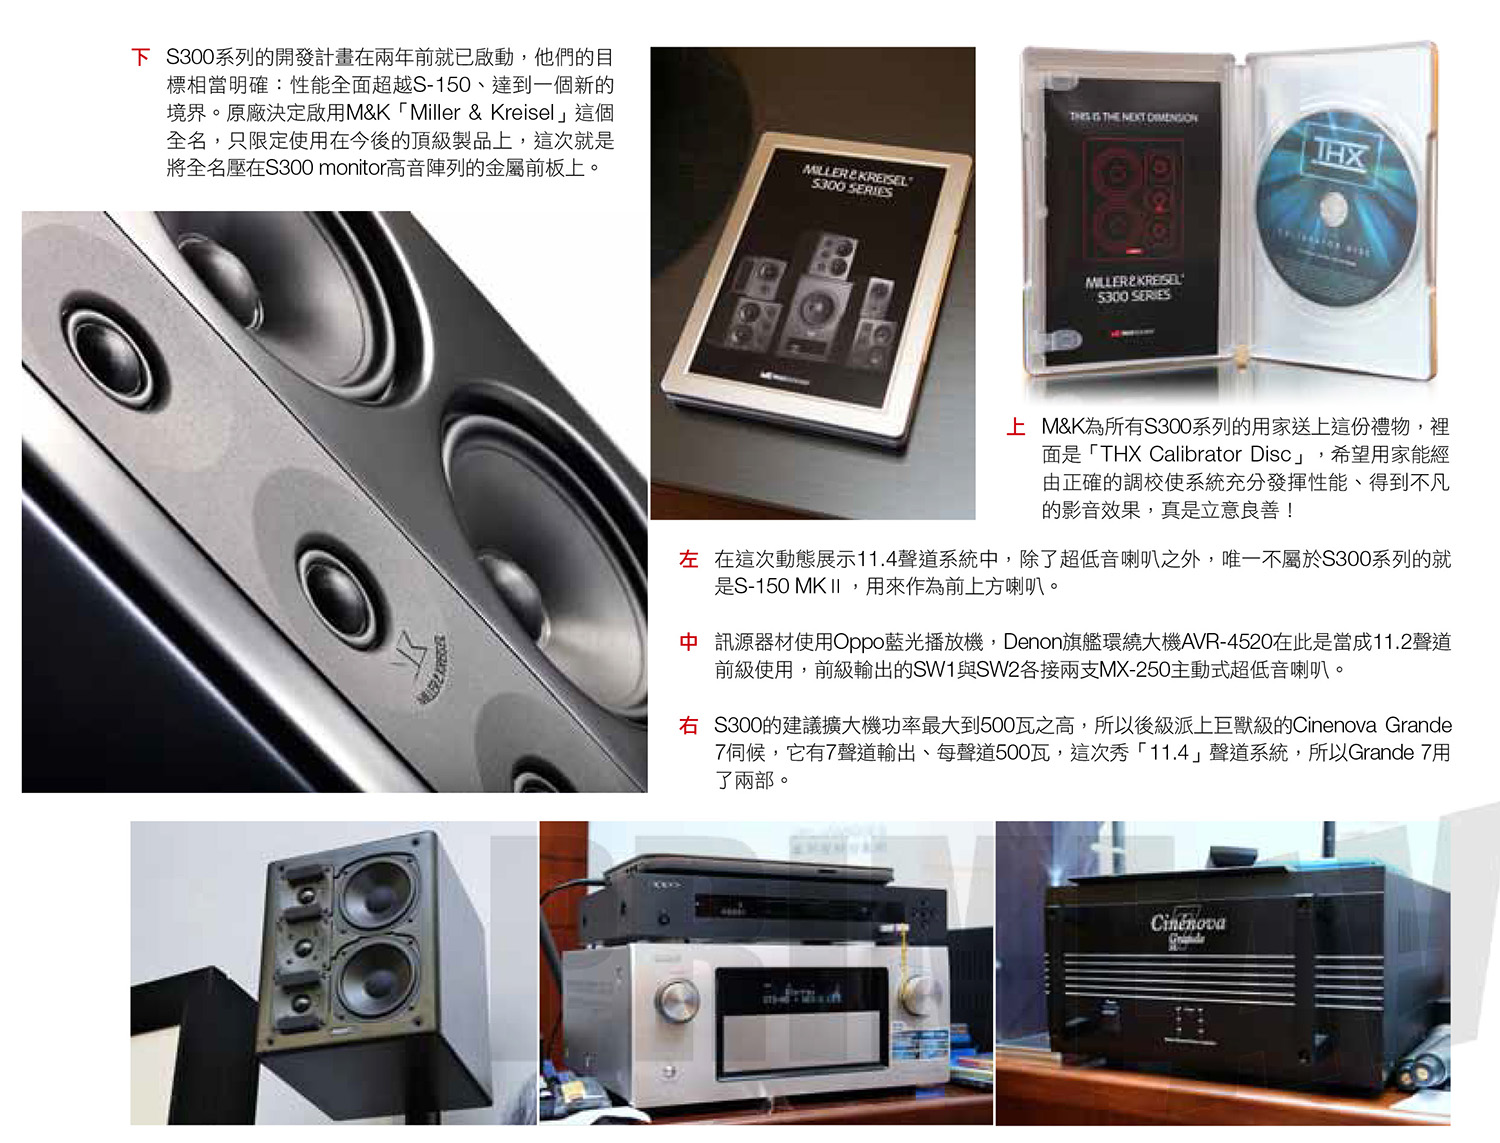 M&K SOUND 新旗艦級喇叭S300全球首演動態展示